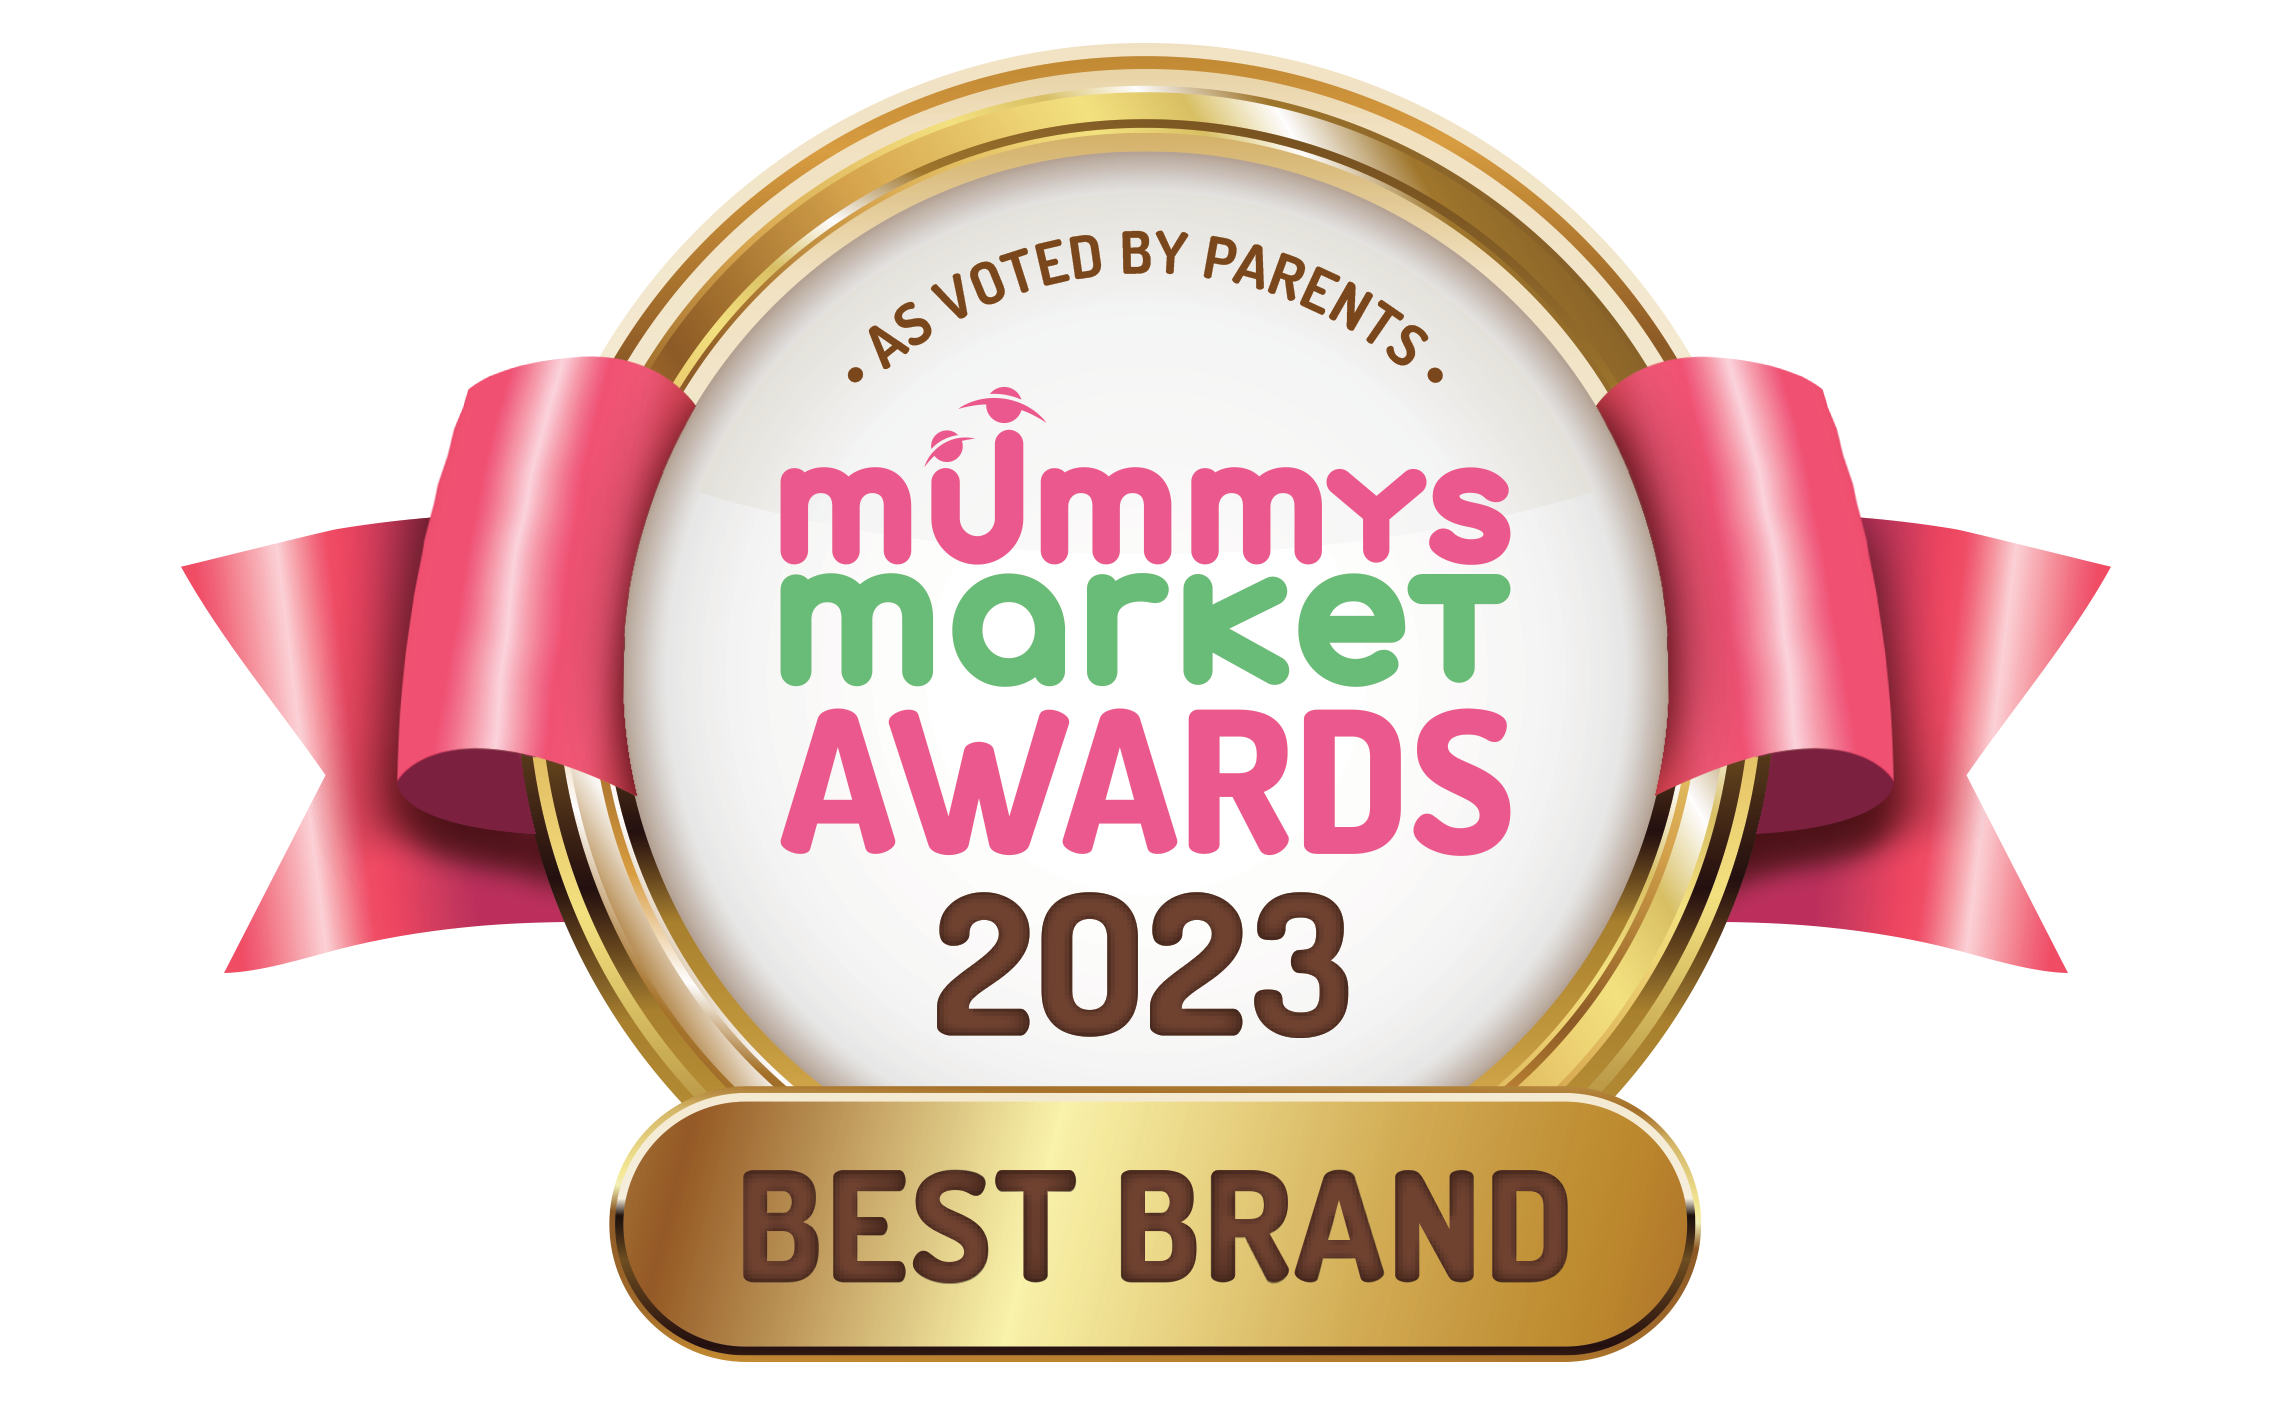 Mum & Baby Care Awards